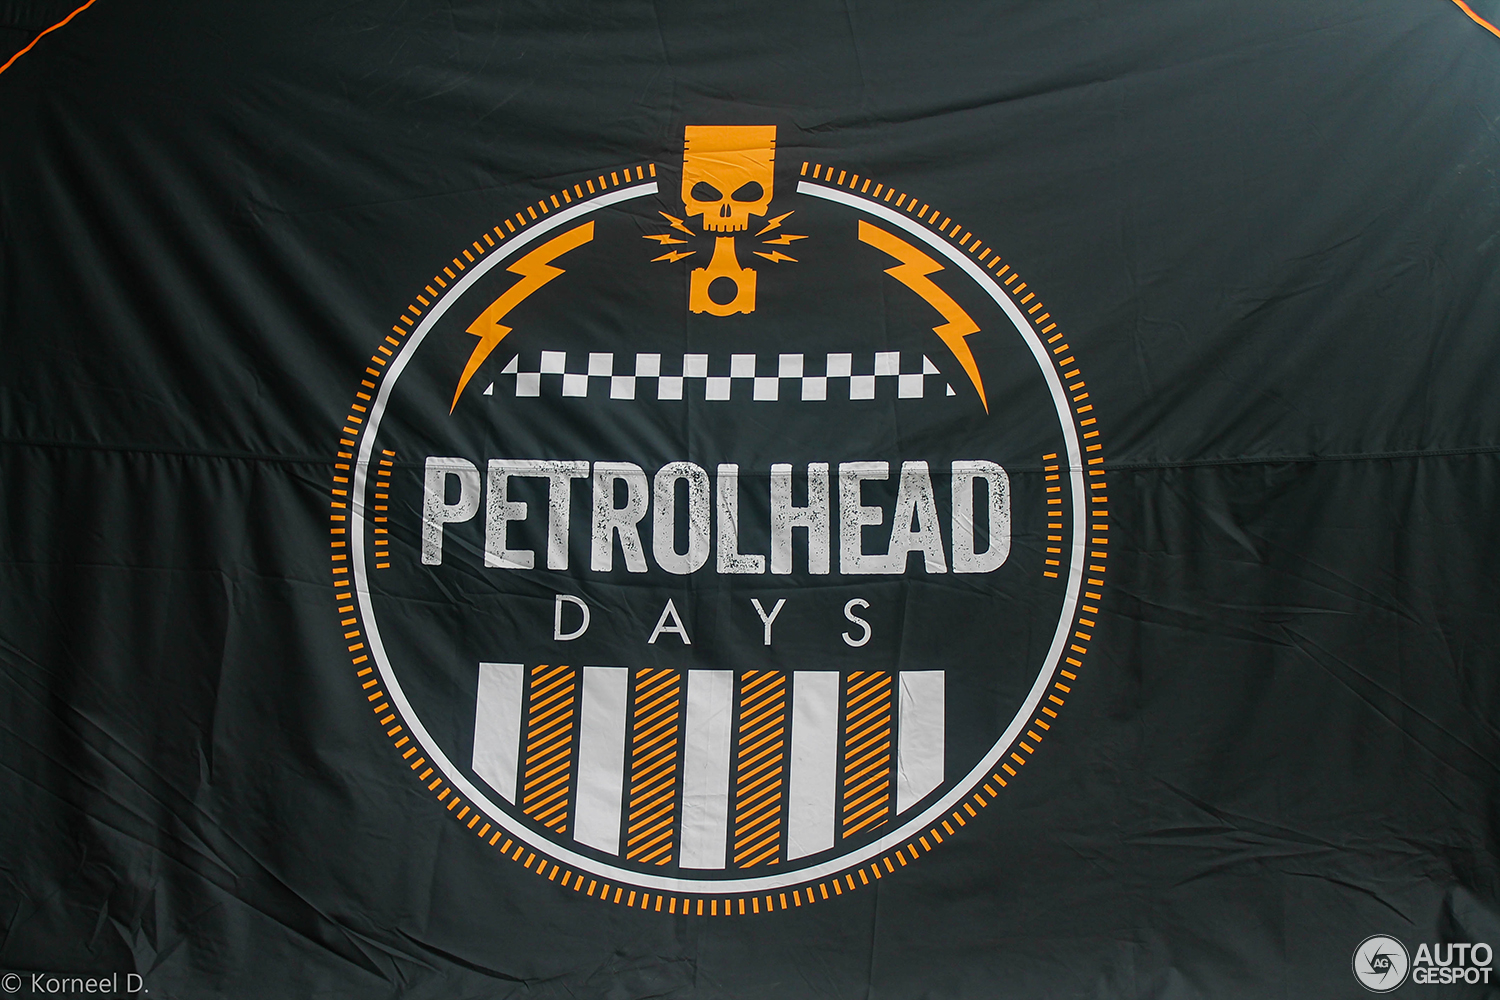 Event: Petrolhead Thursday 